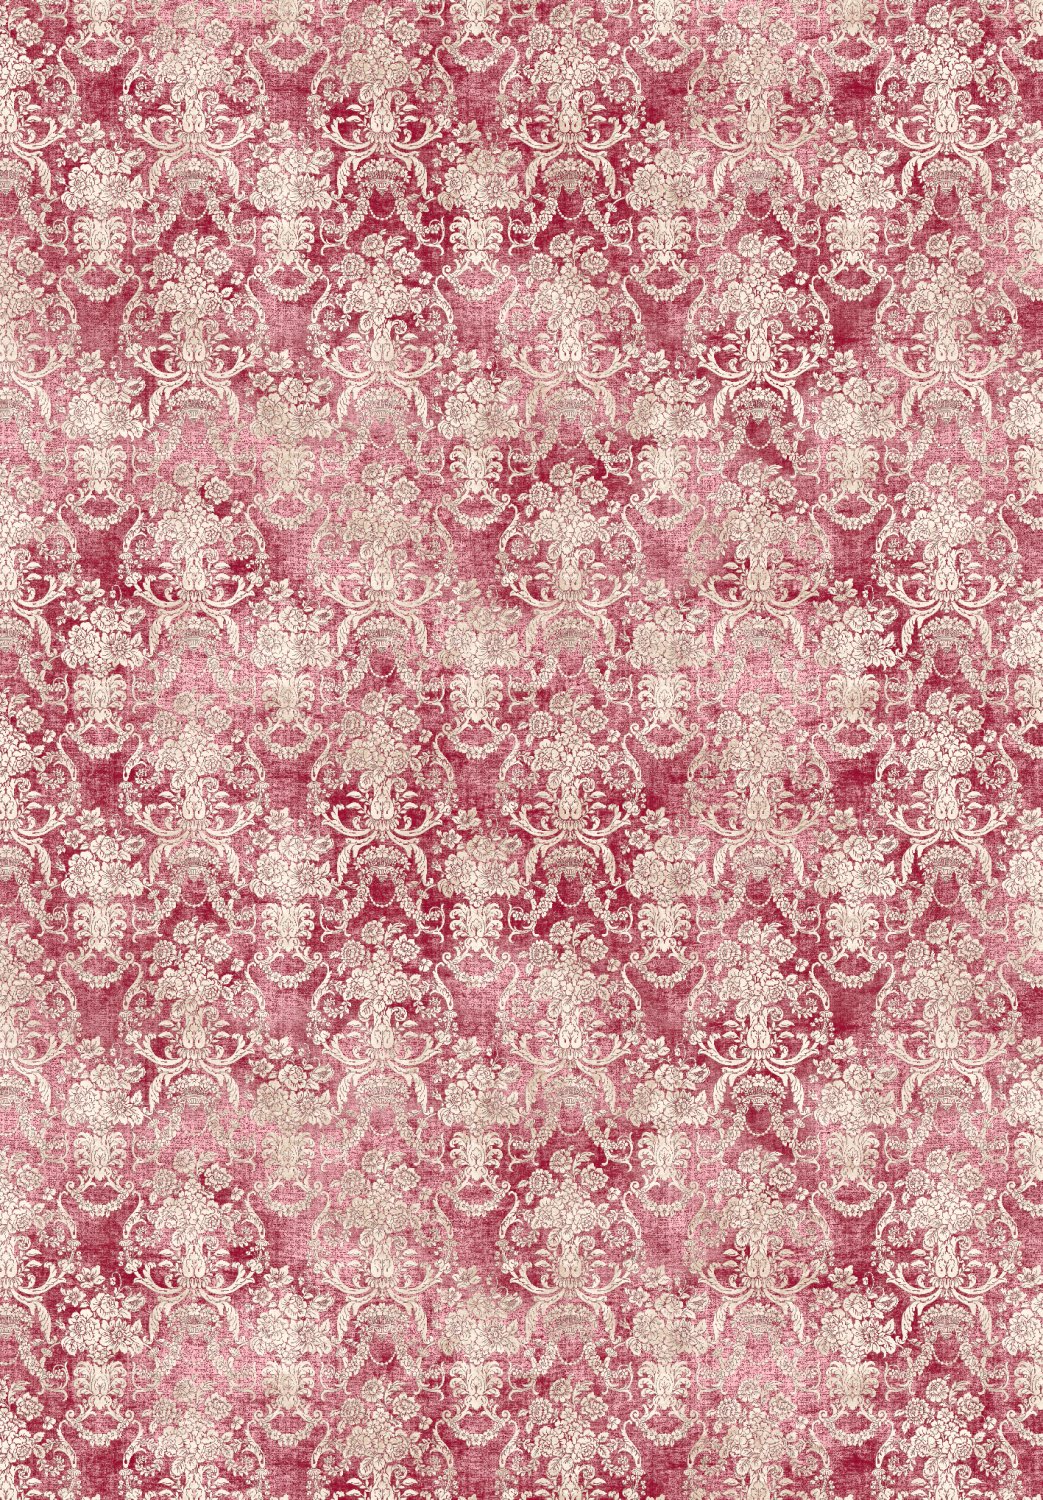 Wilton rug - Edirne (pink)